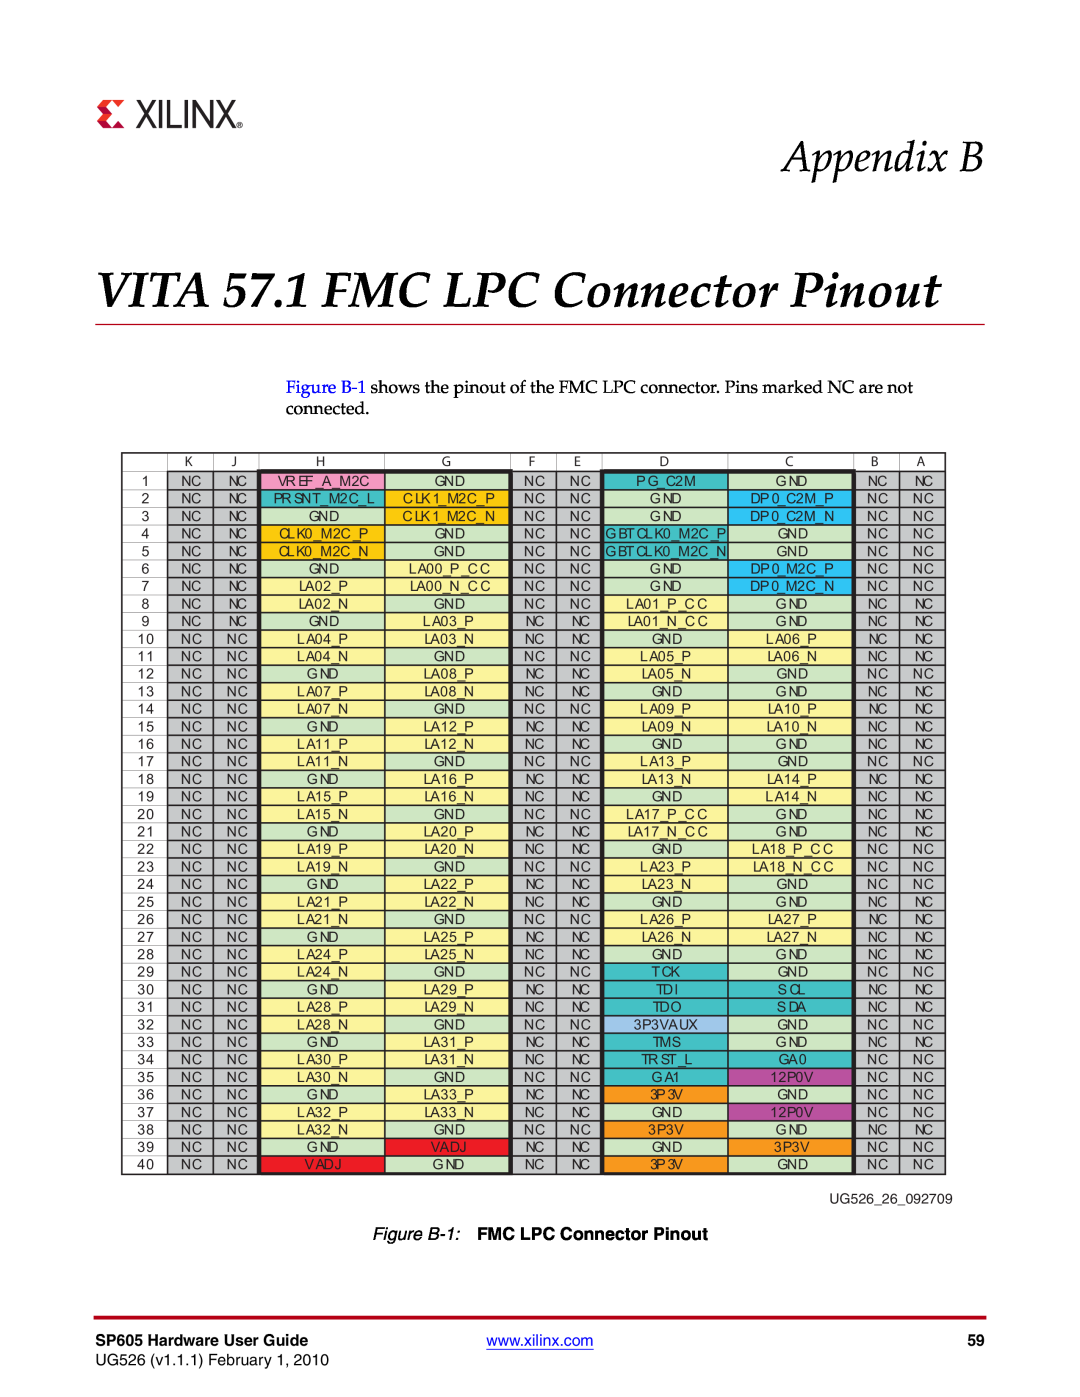 Xilinx SP605 VITA 57.1 FMC LPC Connector Pinout, Appendix B, Figure B-1 FMC LPC Connector Pinout, UG526 v1.1.1 February 1 